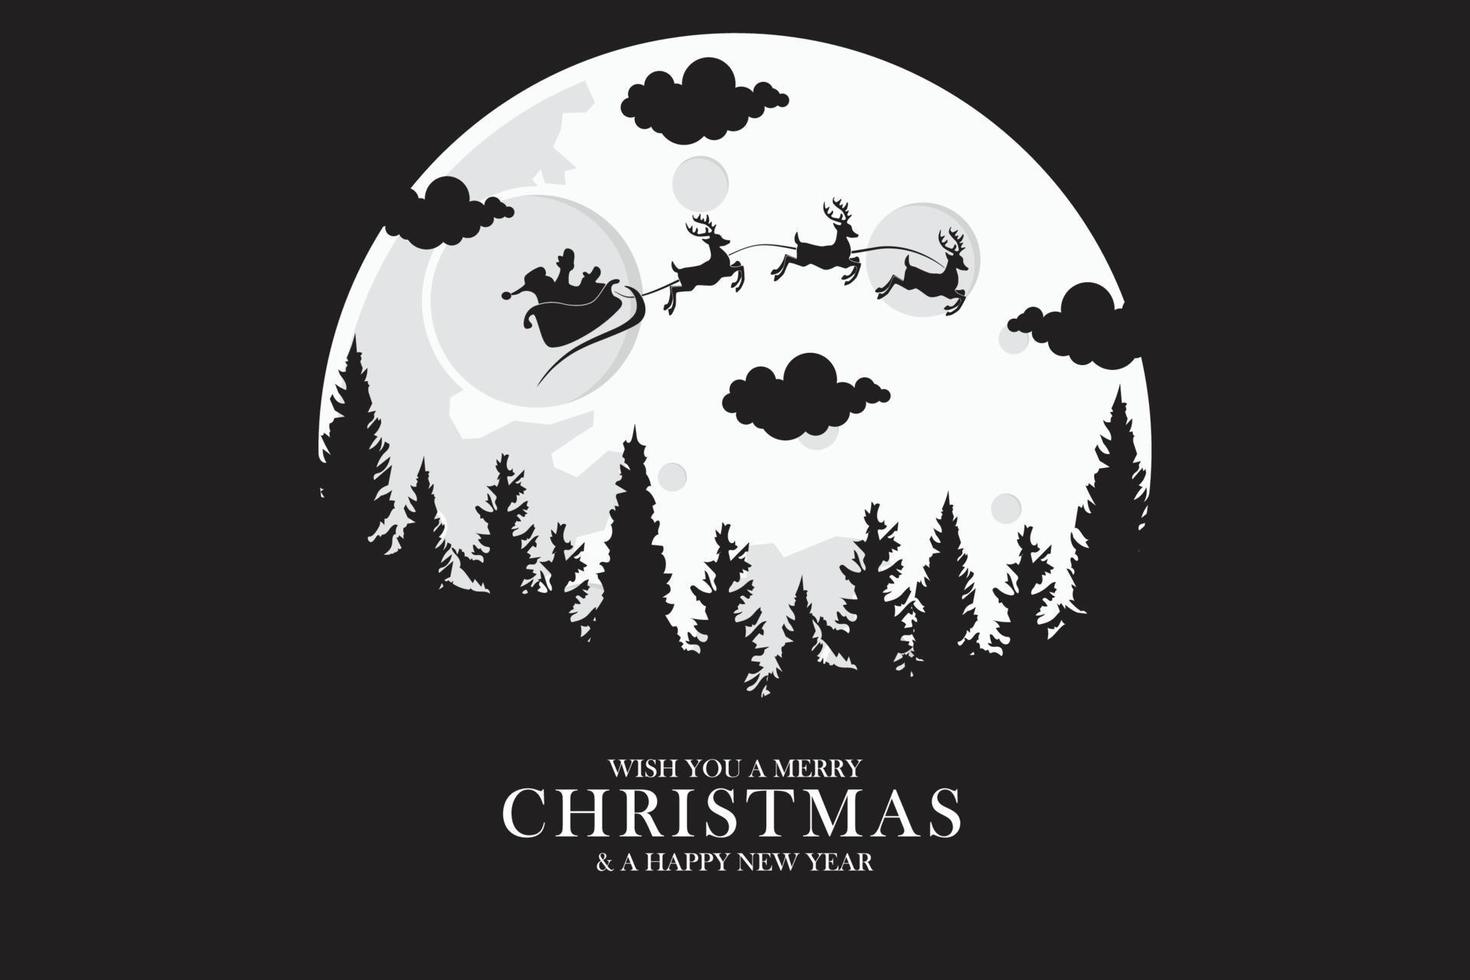 Merry Christmas with Santa Claus sleigh vector